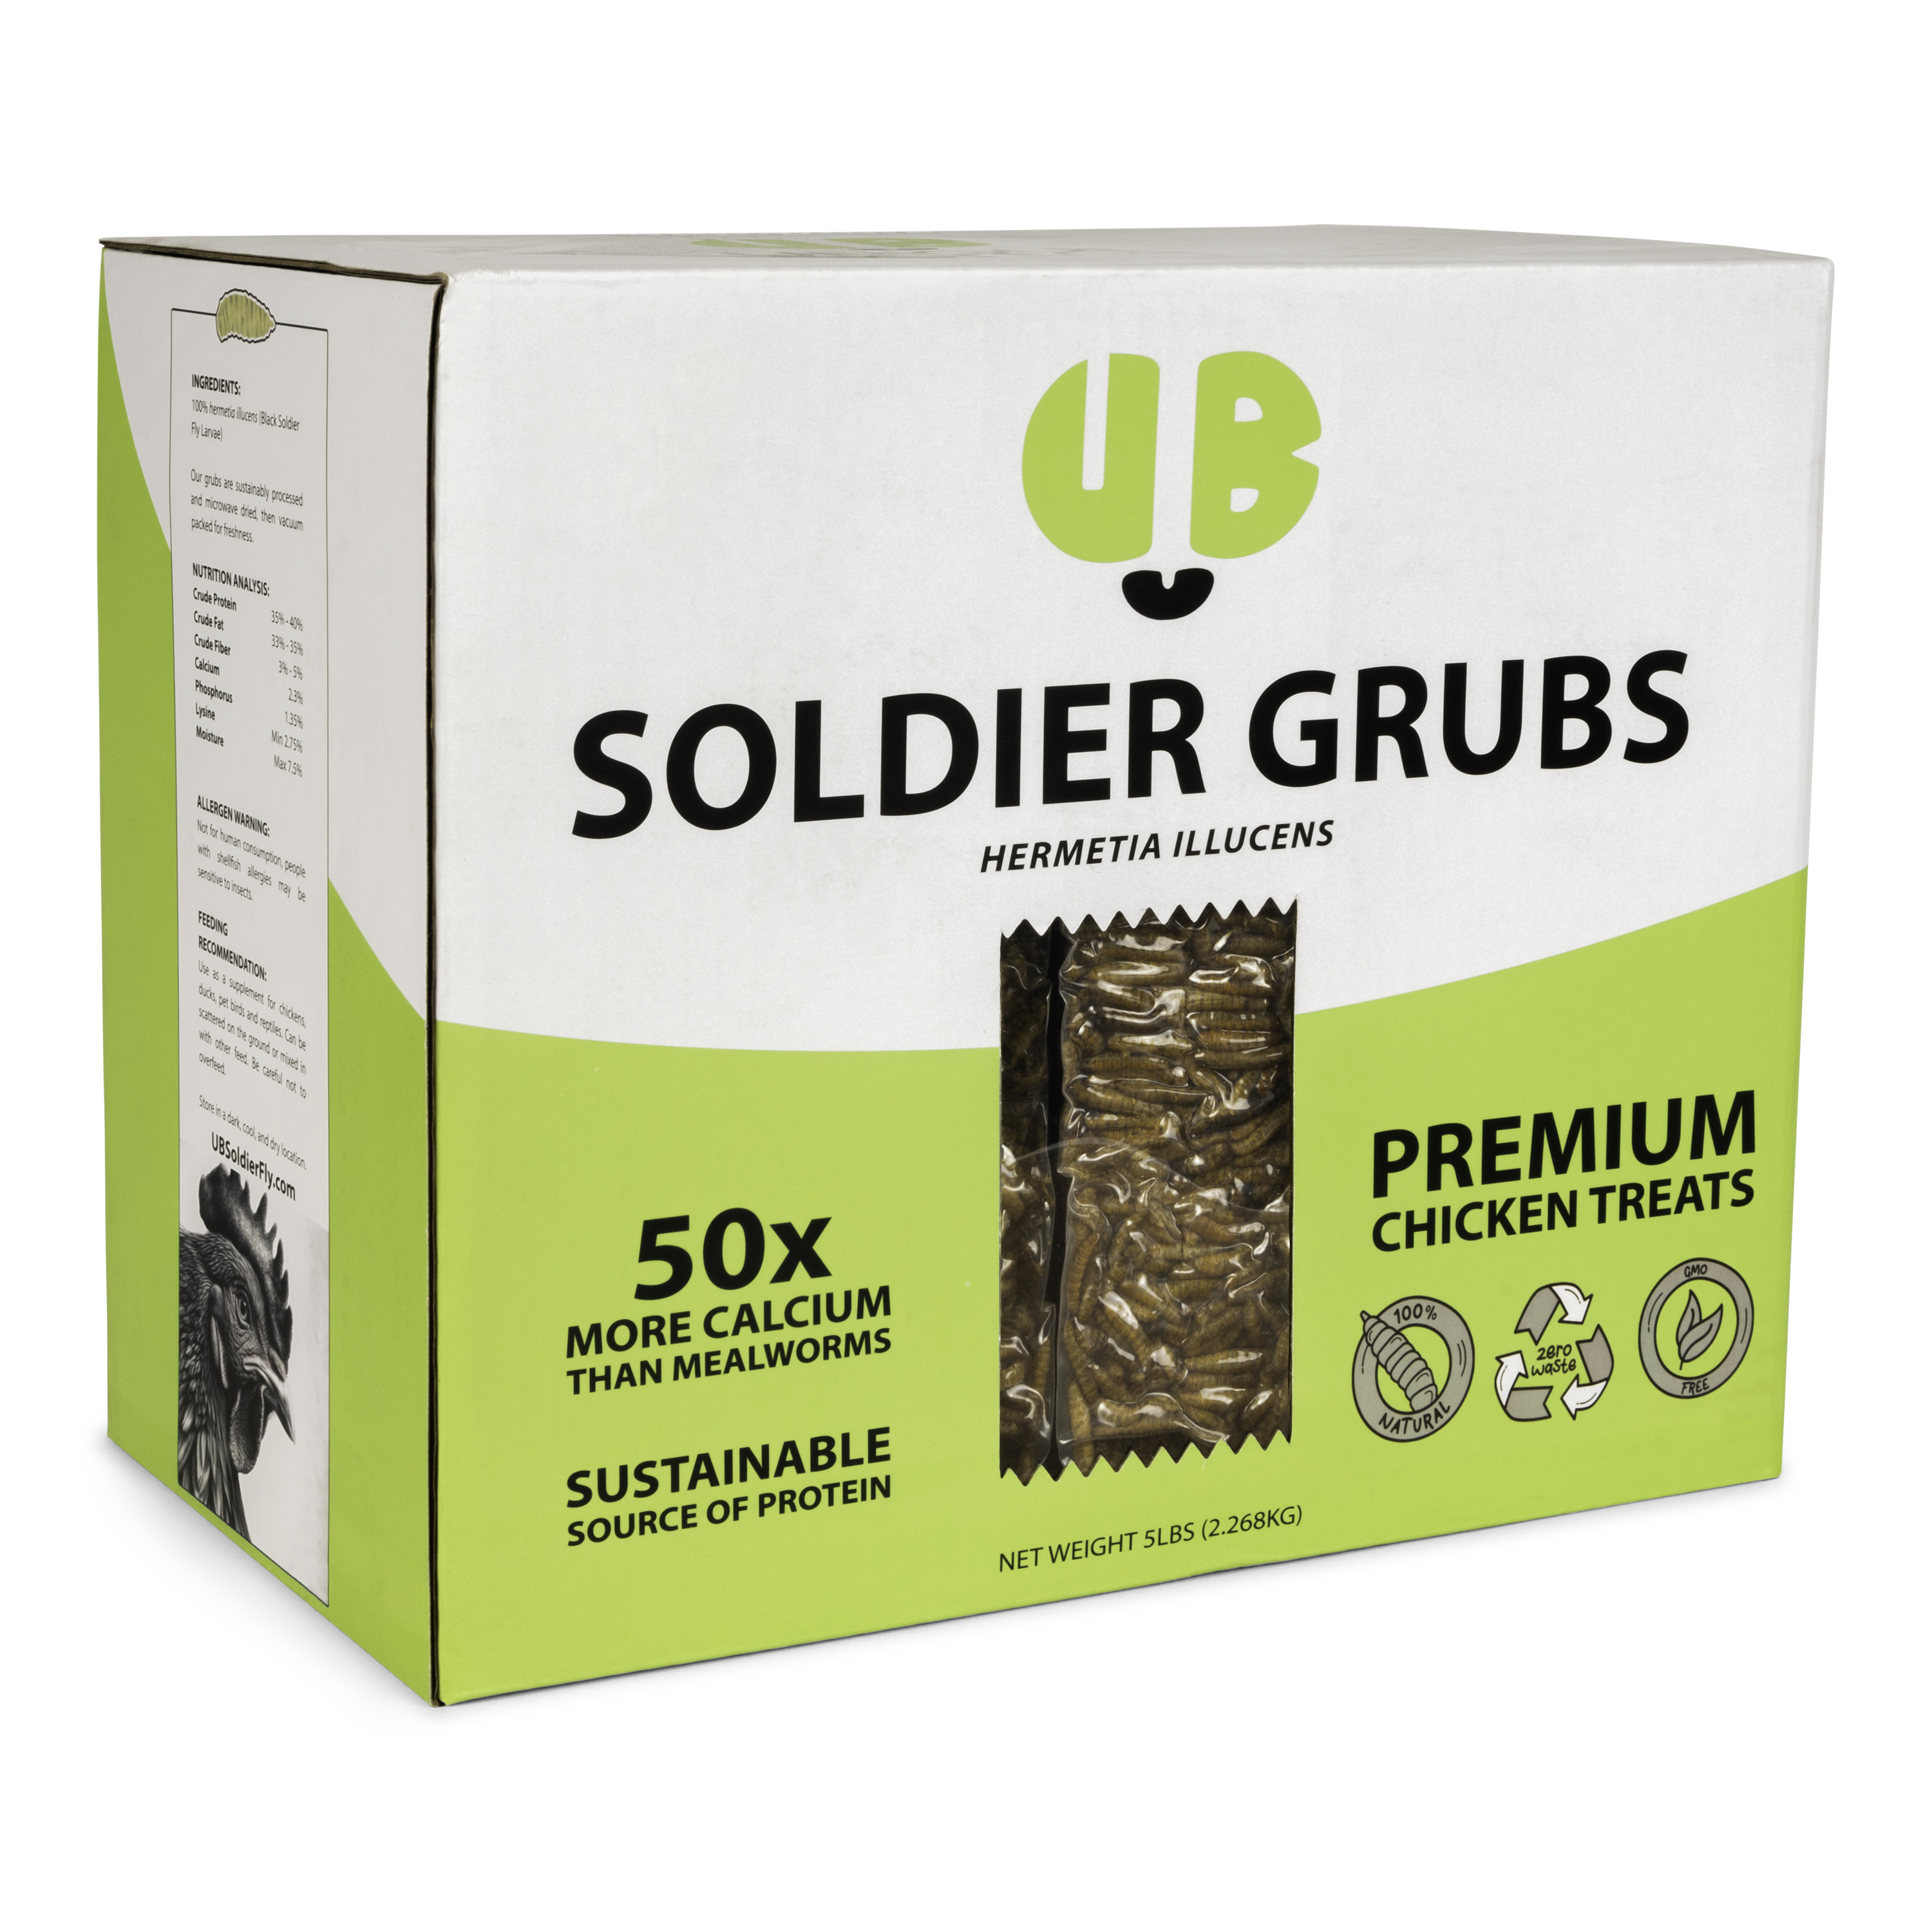 UB soldier grubs dry roasted black soldier fly larvae hermetia illucens chicken treats